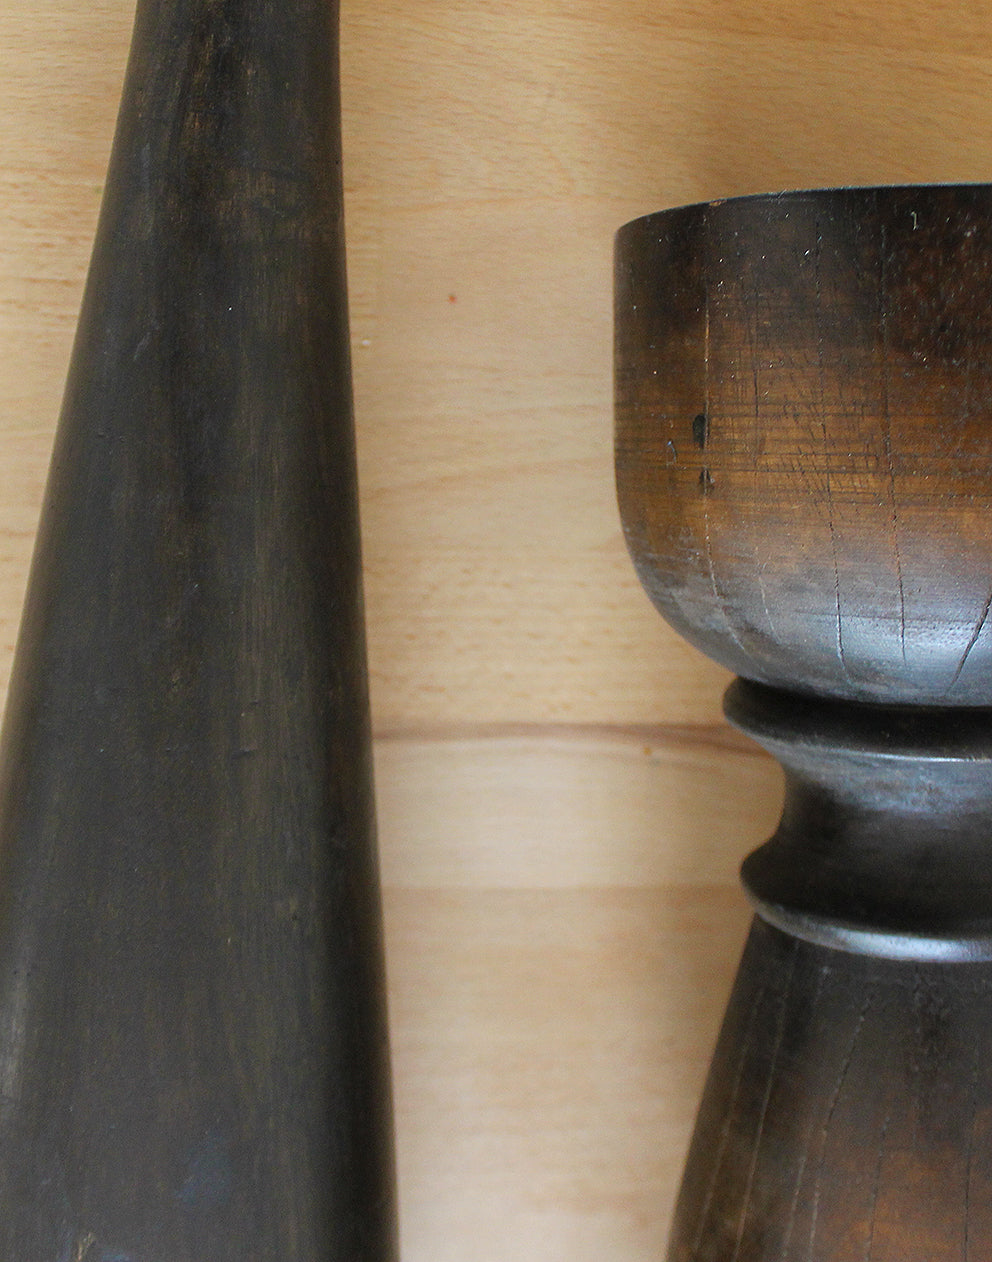 Extra Large Dark Brown Mango Wood Timber Pedestal Candle Holder & Table Centrepiece